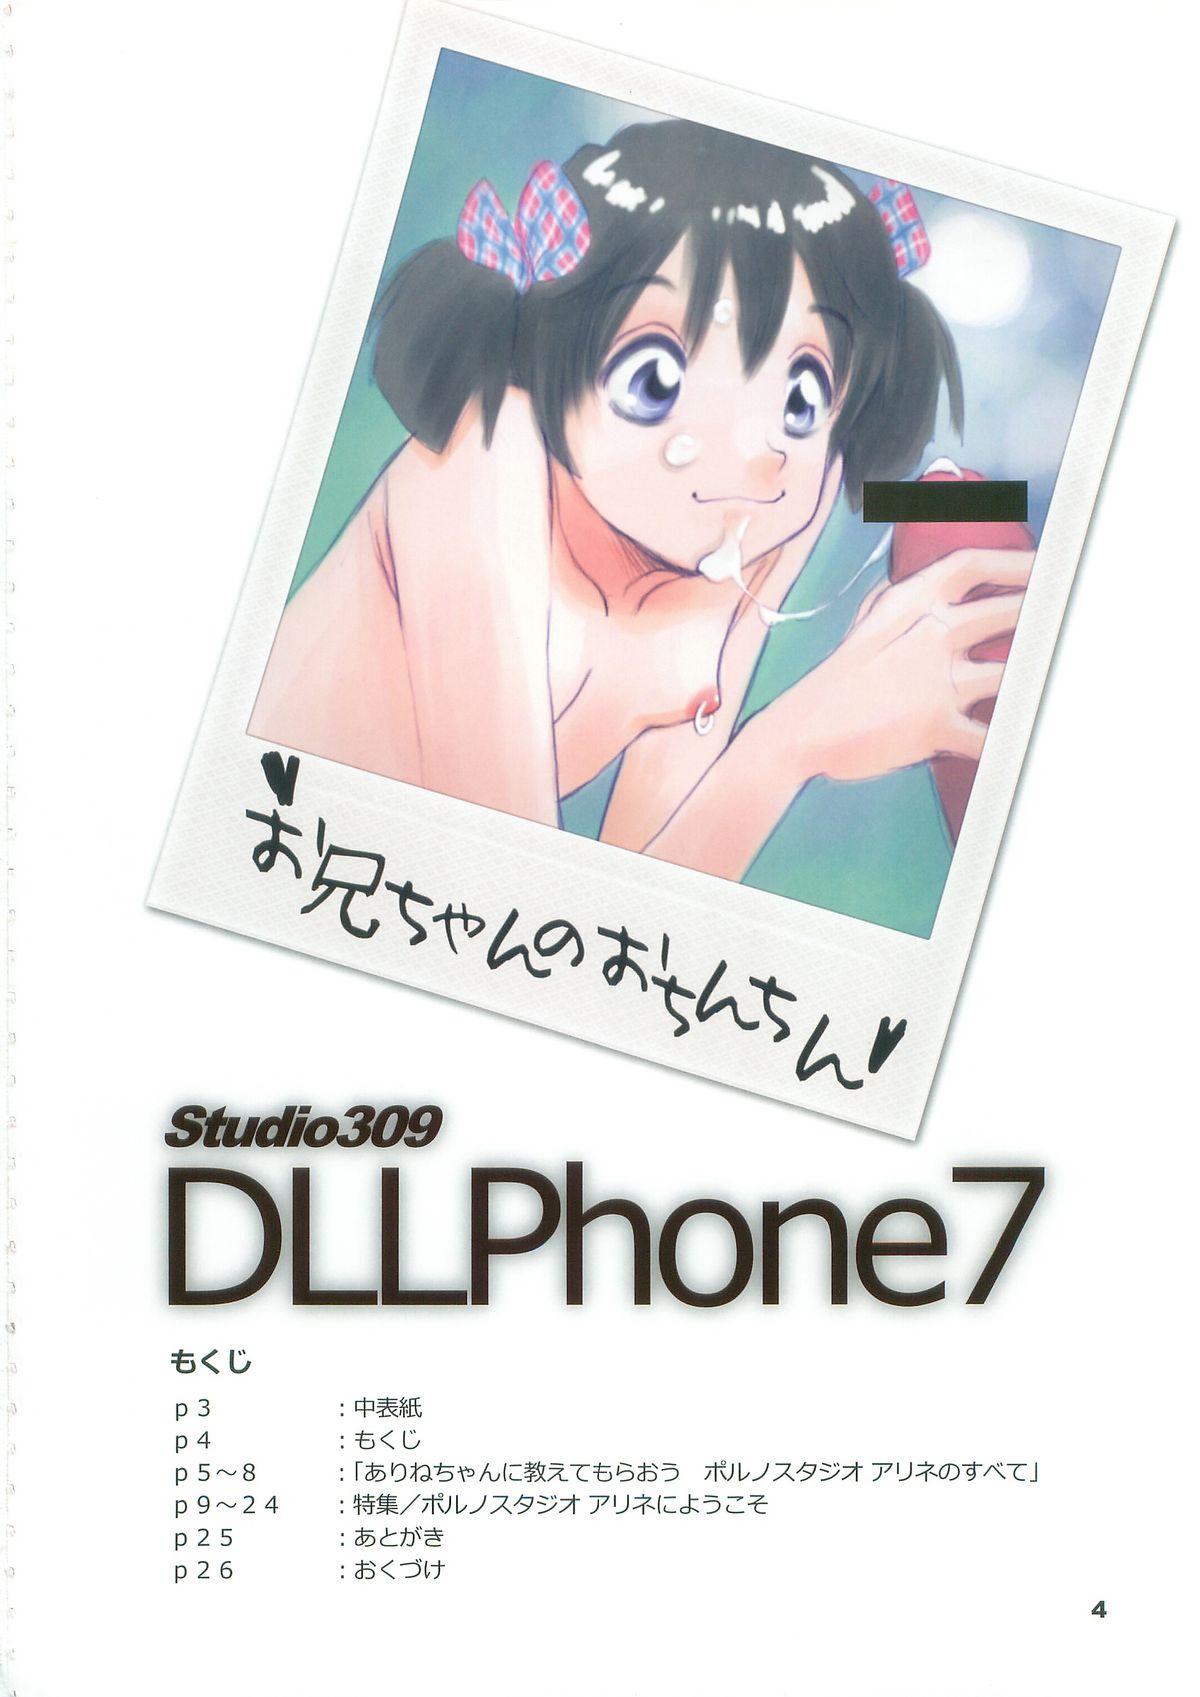 DLLPhone7 3